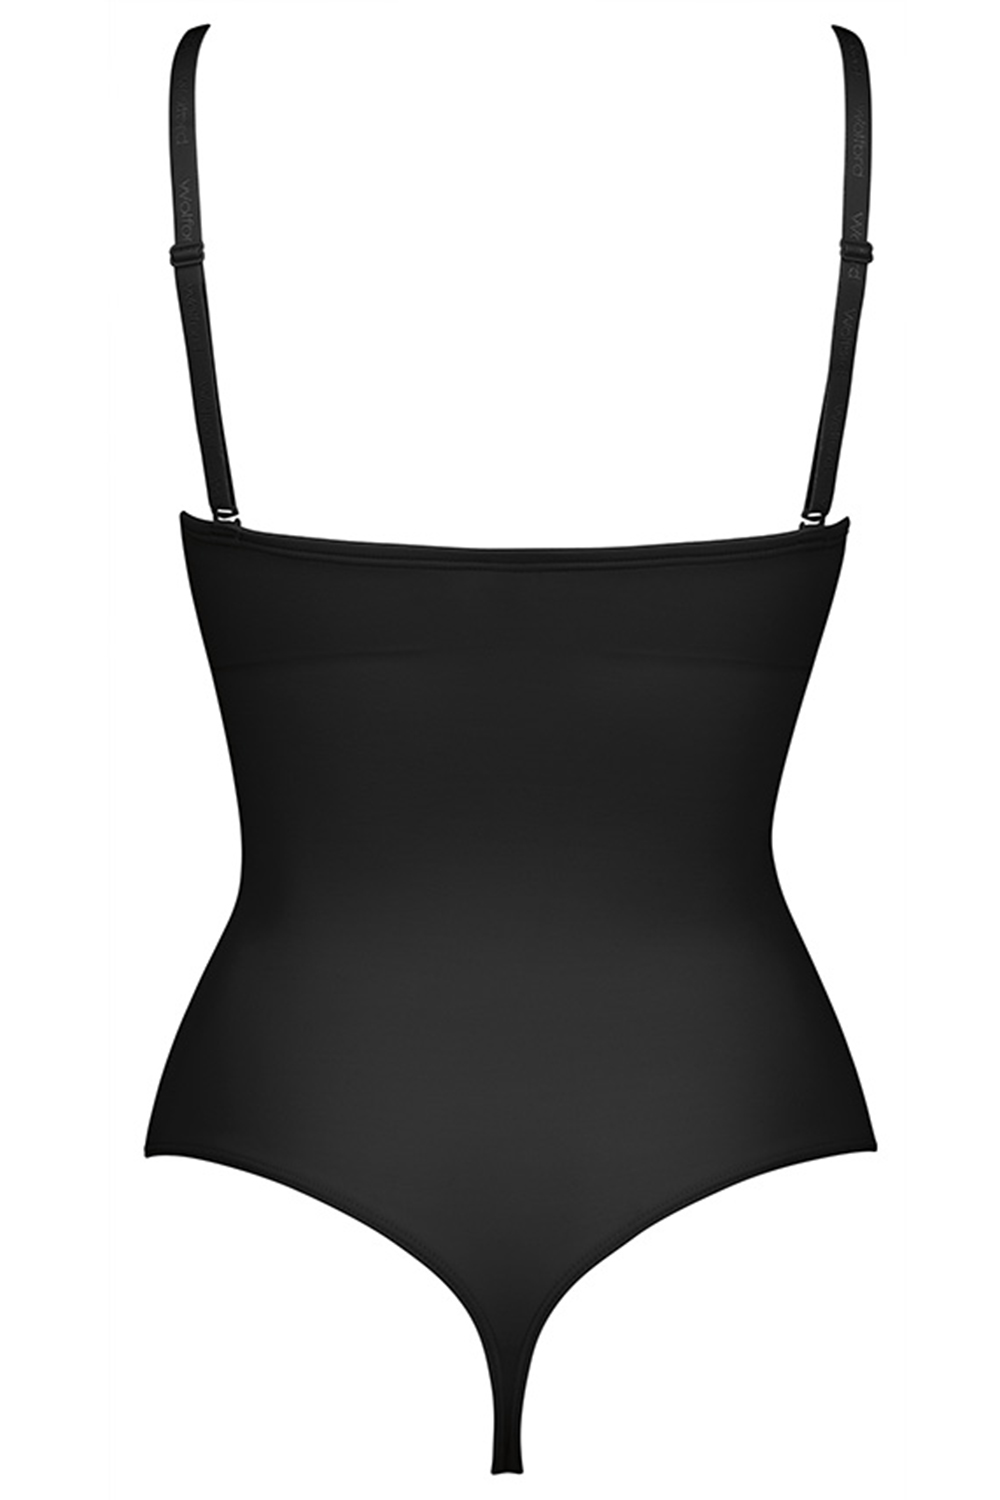 Black Wolford Mat de Luxe forming bodysuit